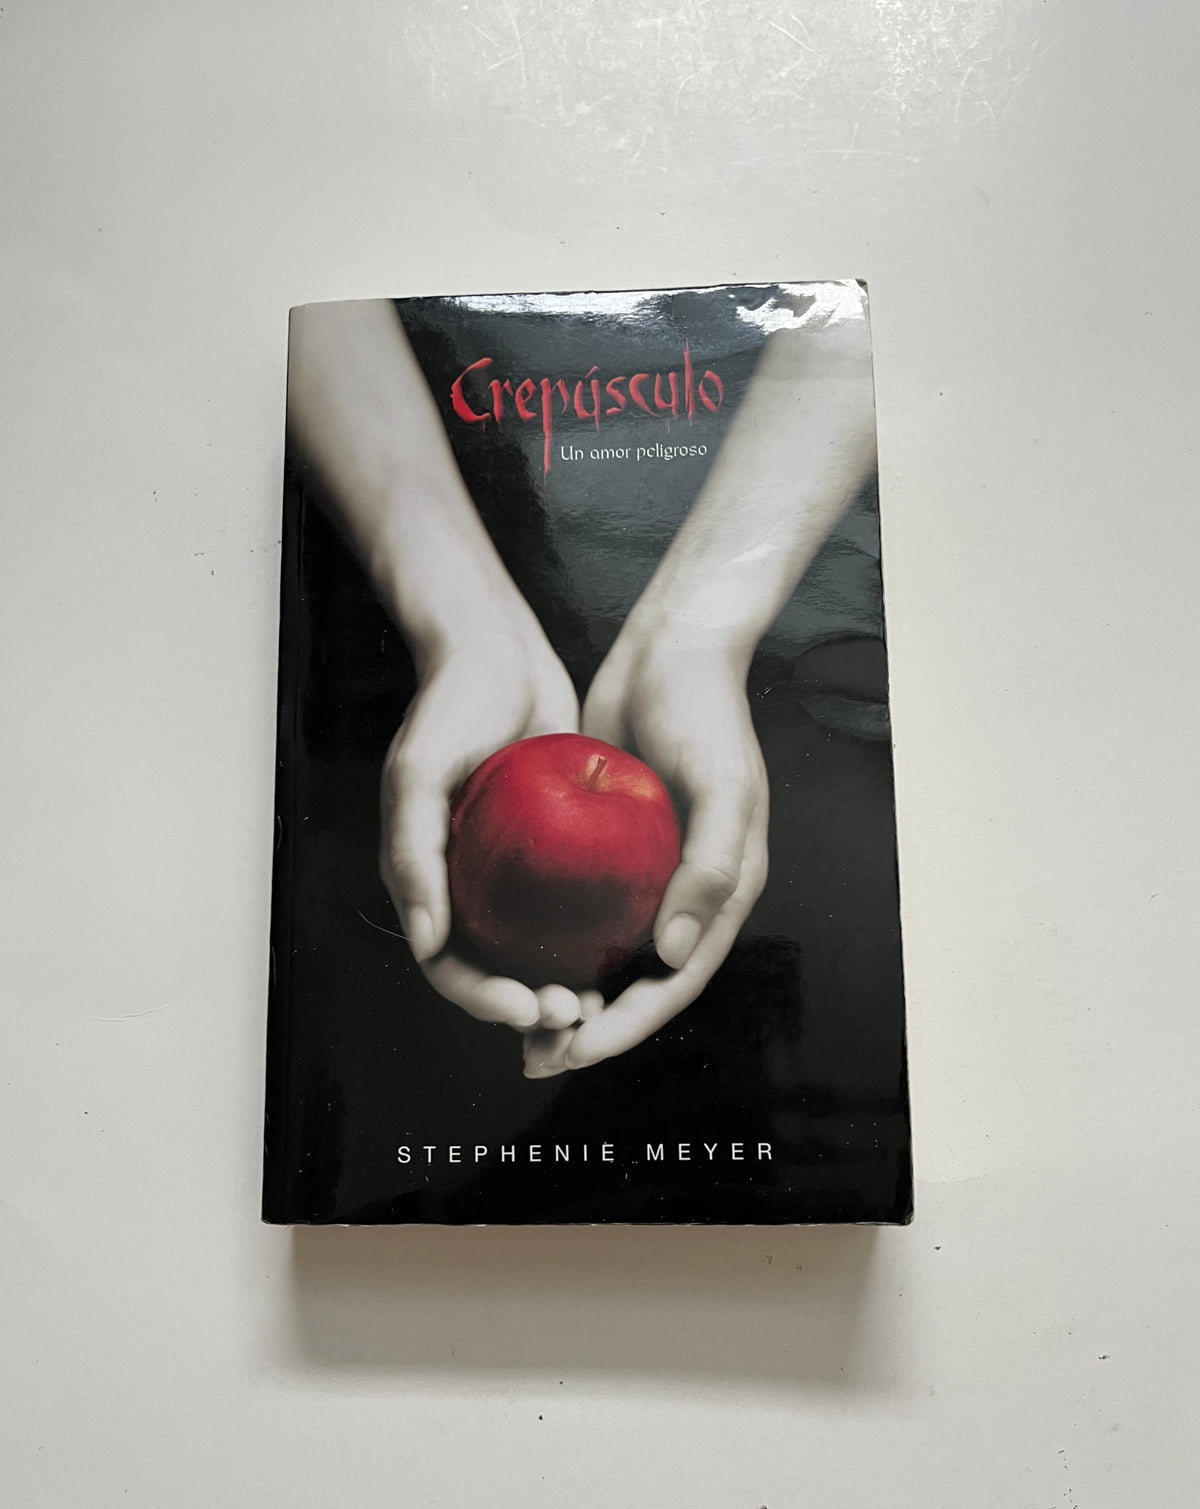 Crepusculo por Stephanie Meyer